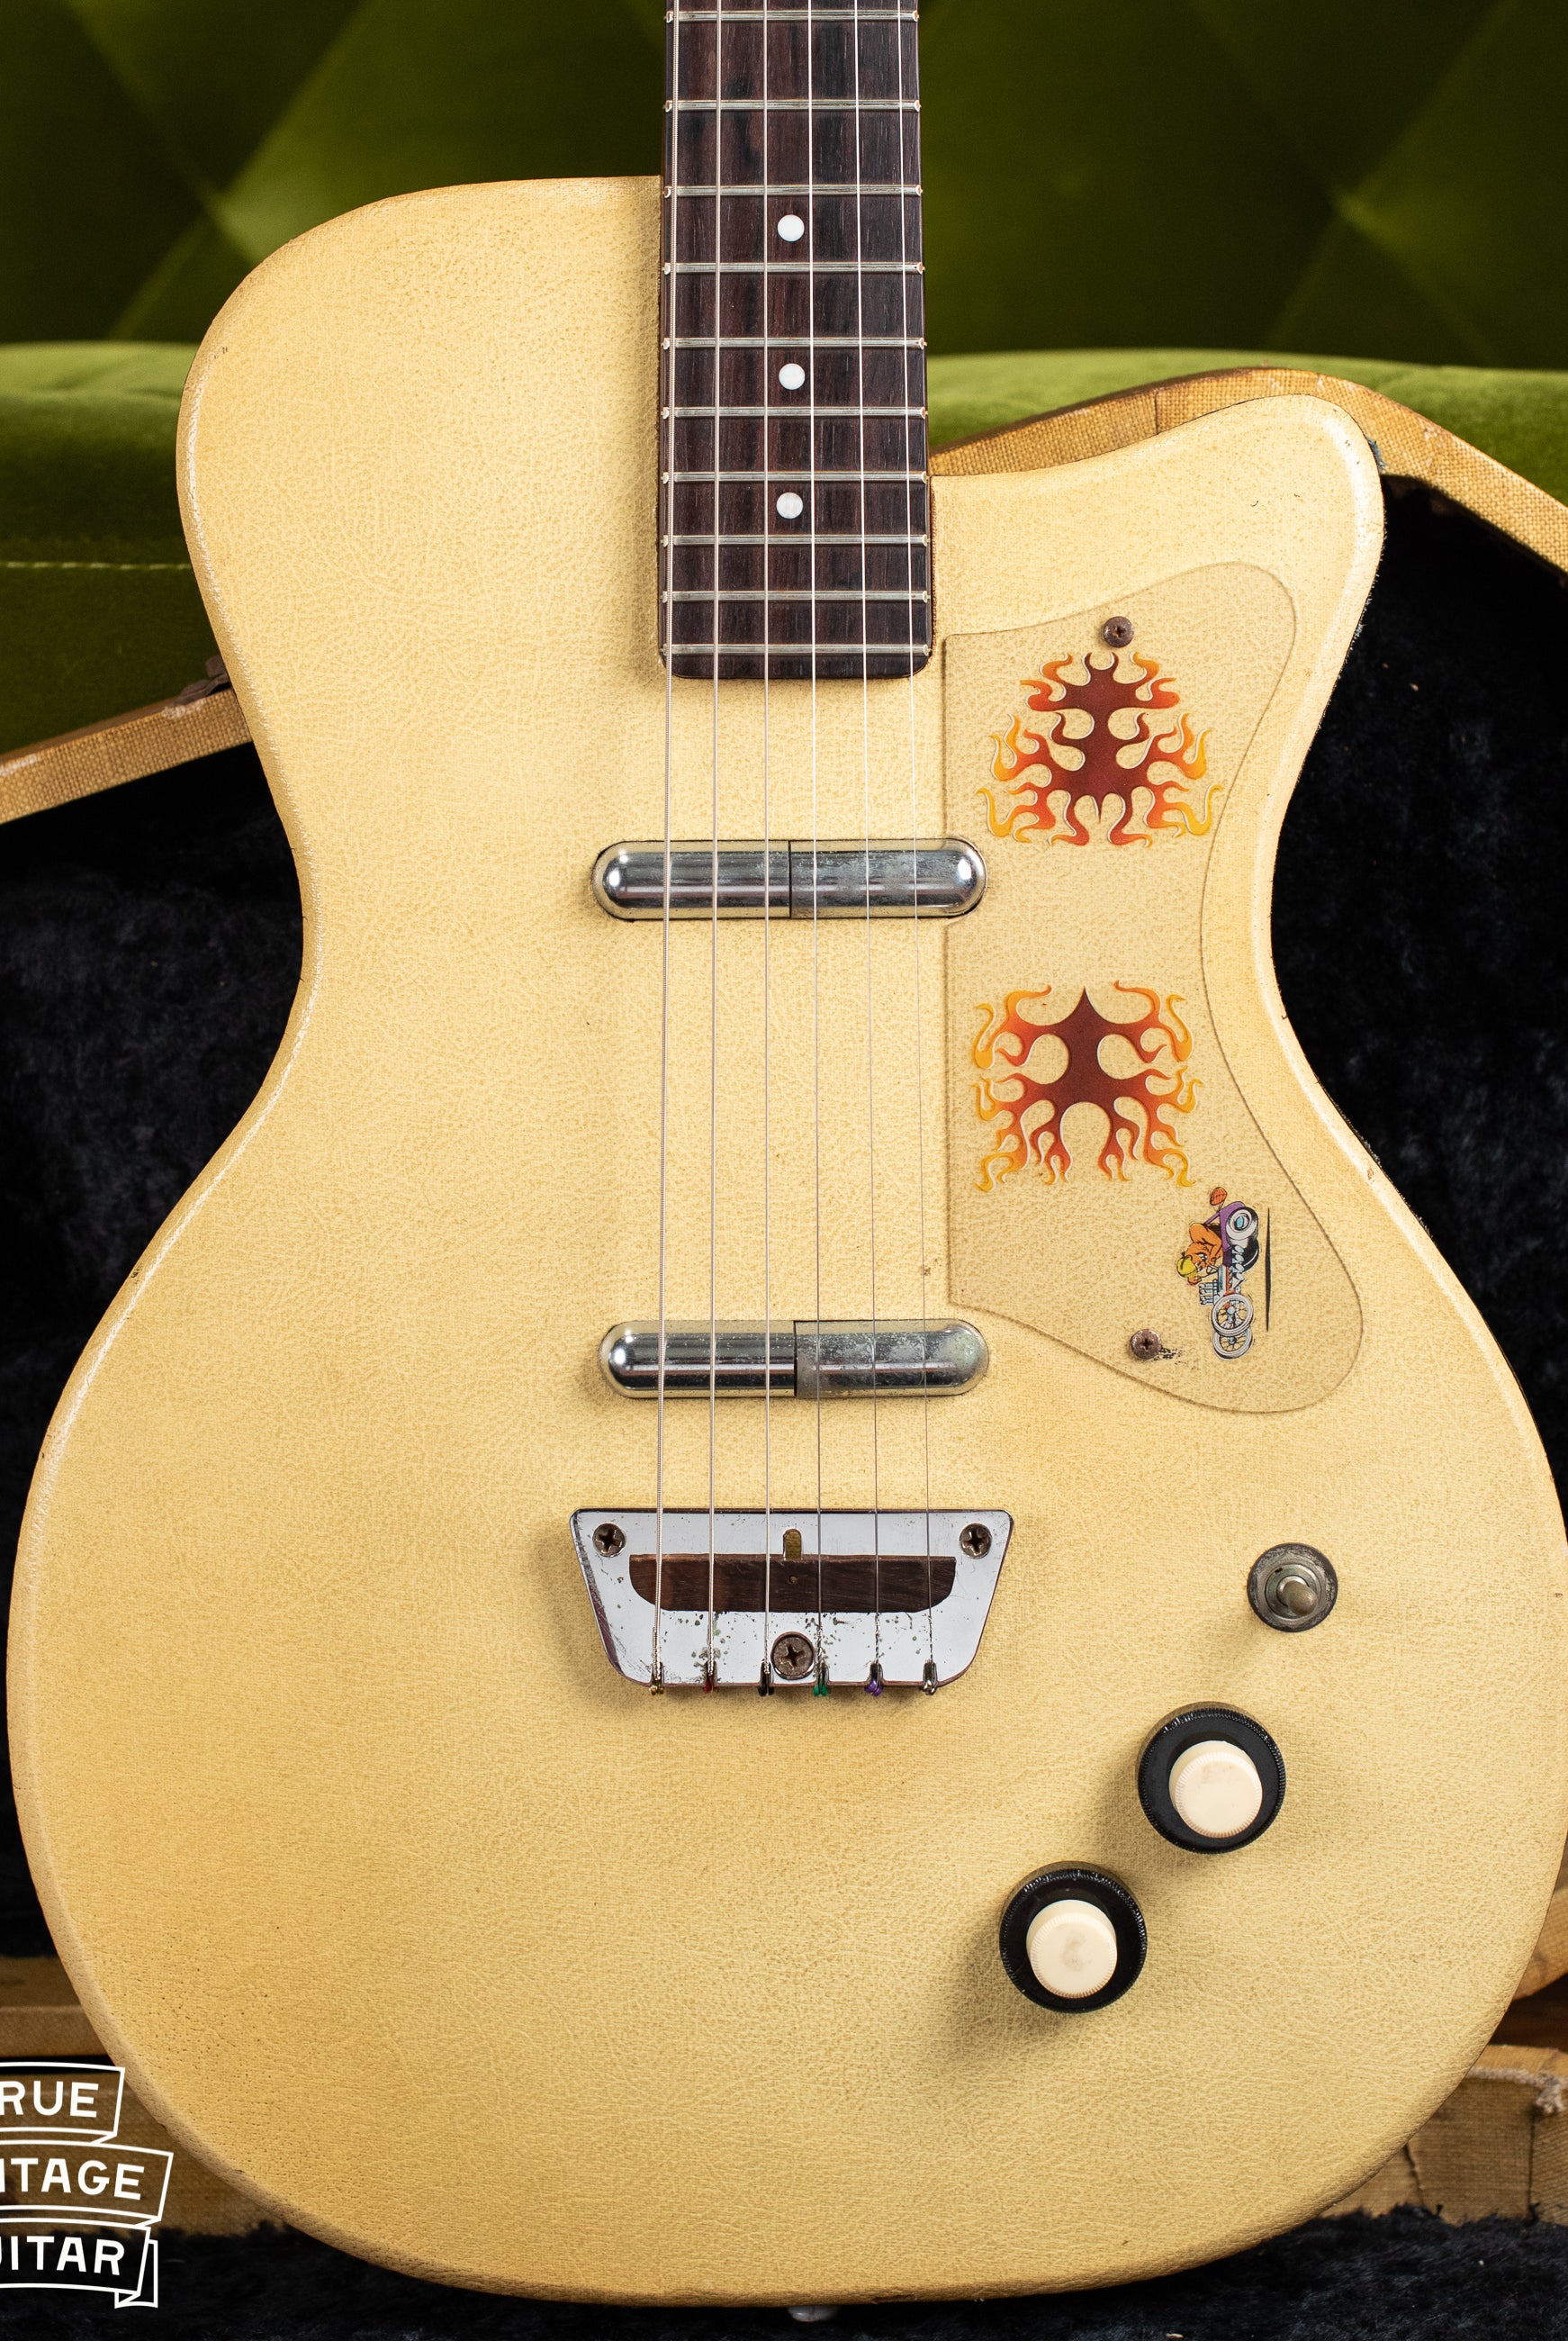 Vintage Danelectro cream white electric guitar